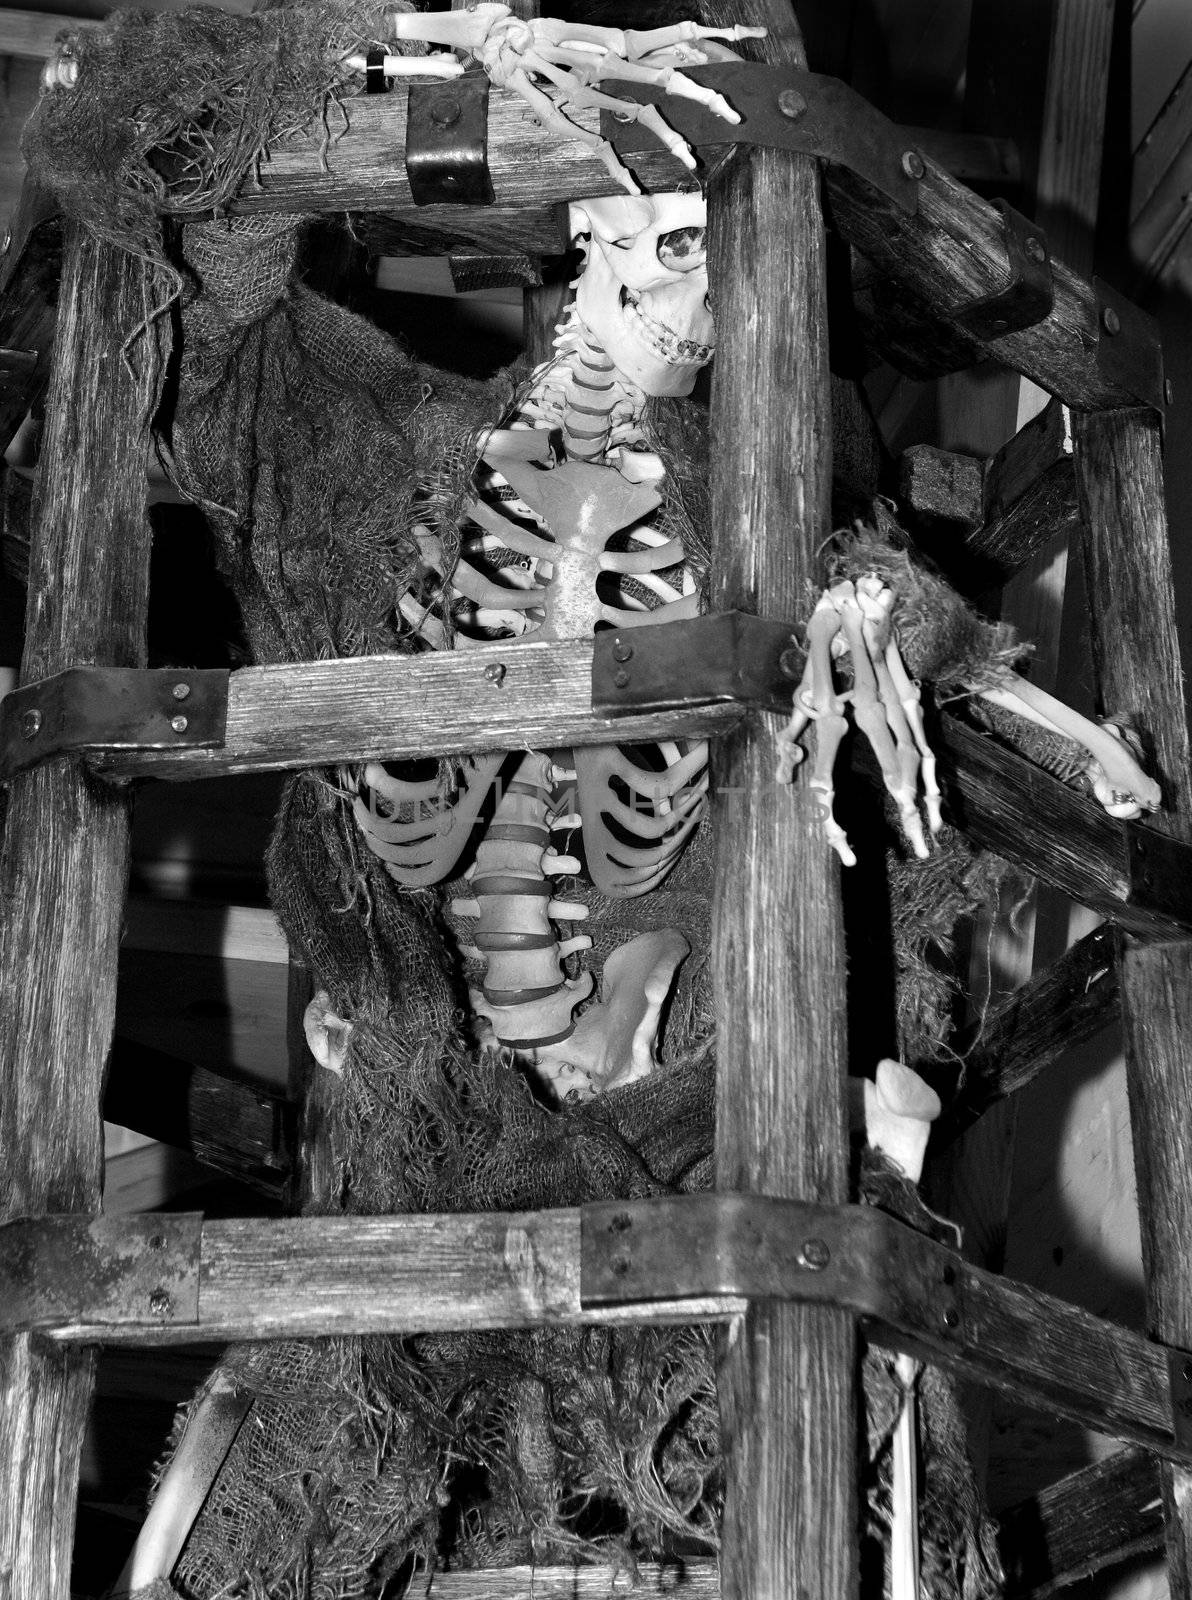 skeleton, death, bones, skull, died, crisis, hunger, punishment, execution, tree, wooden, cage